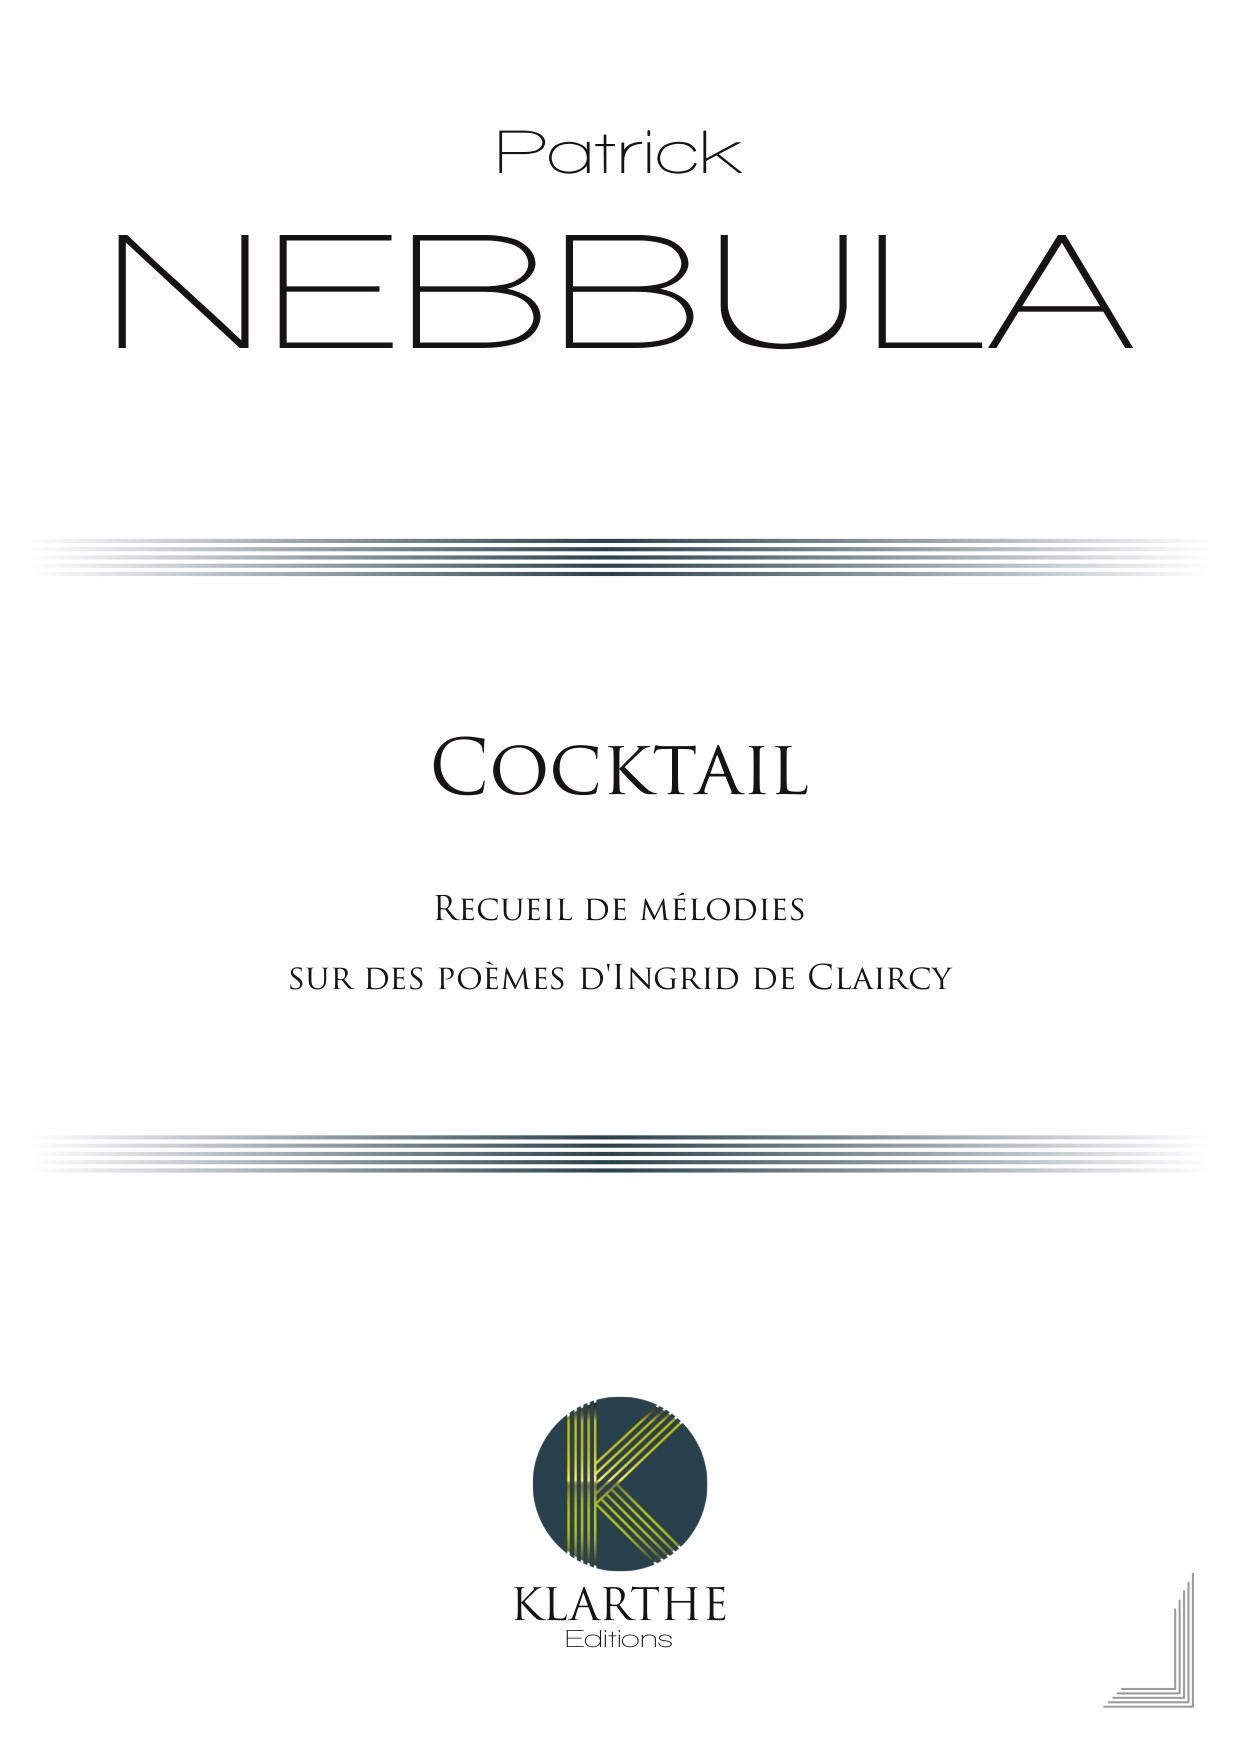 Cocktail (NEBBULA PATRICK)